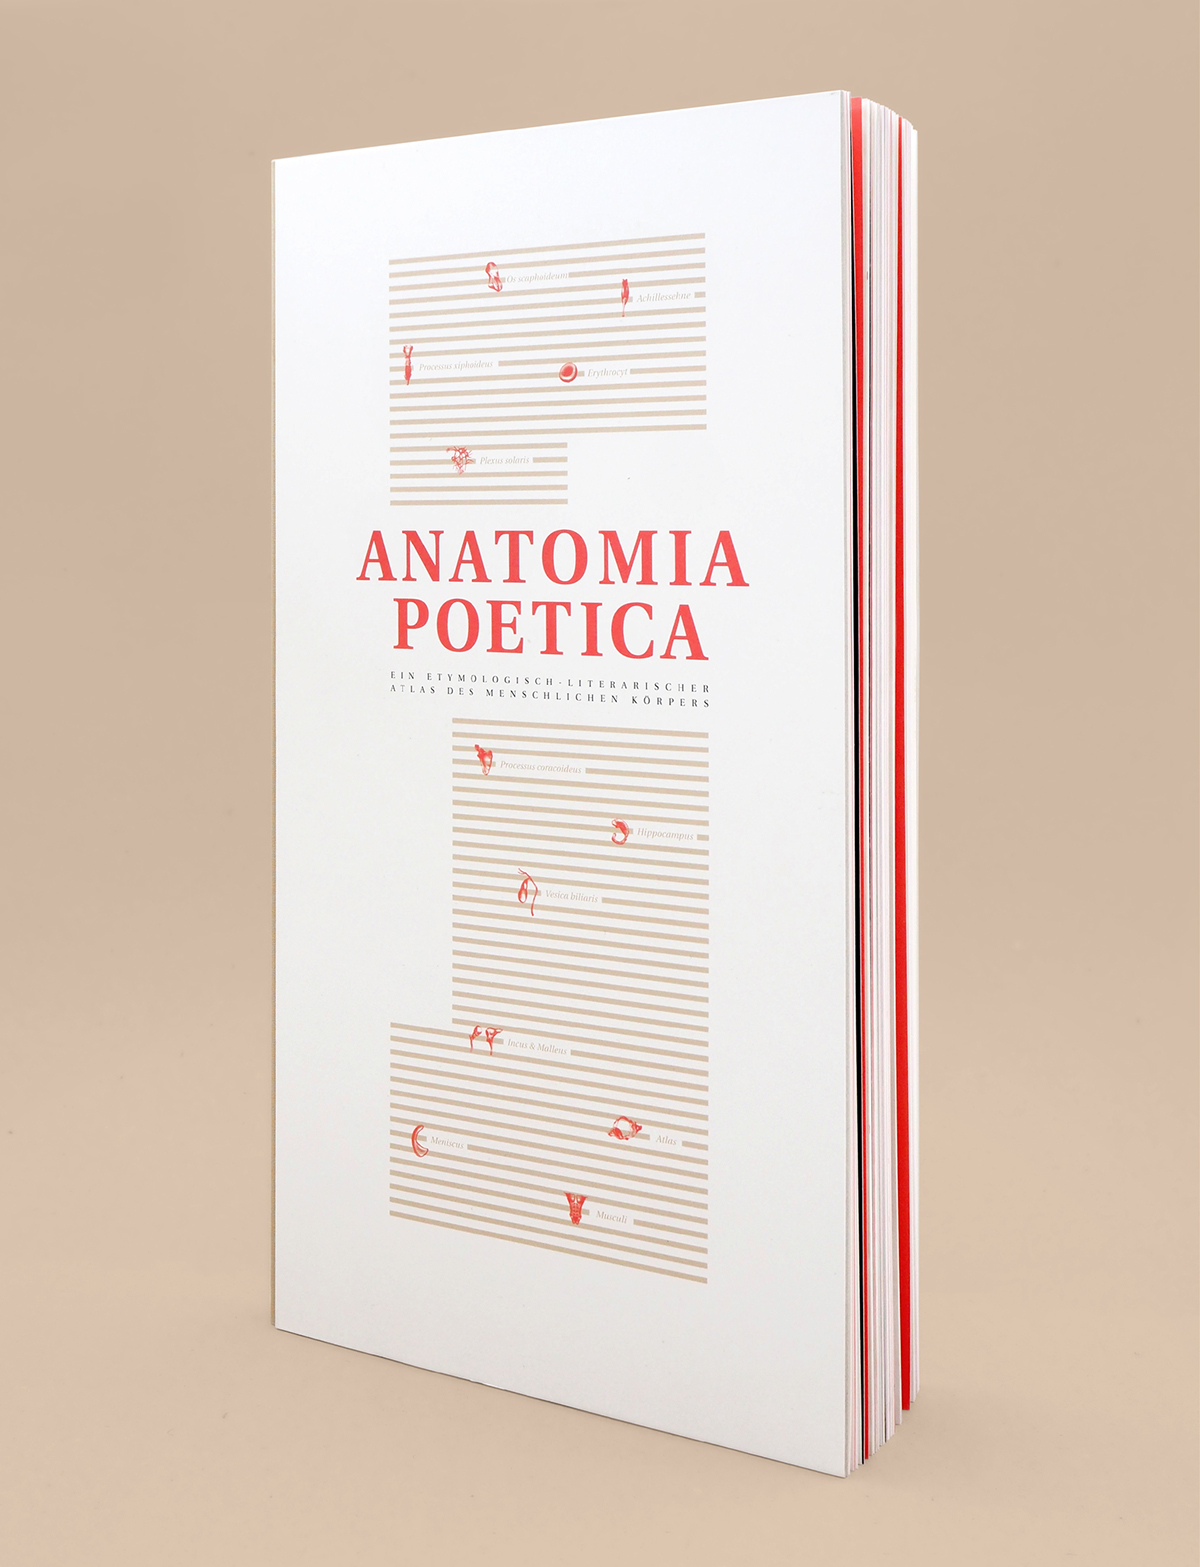 anatomy anatomia poetica book atlas literature bone Cell blood poem red serif Anthology translation Latin